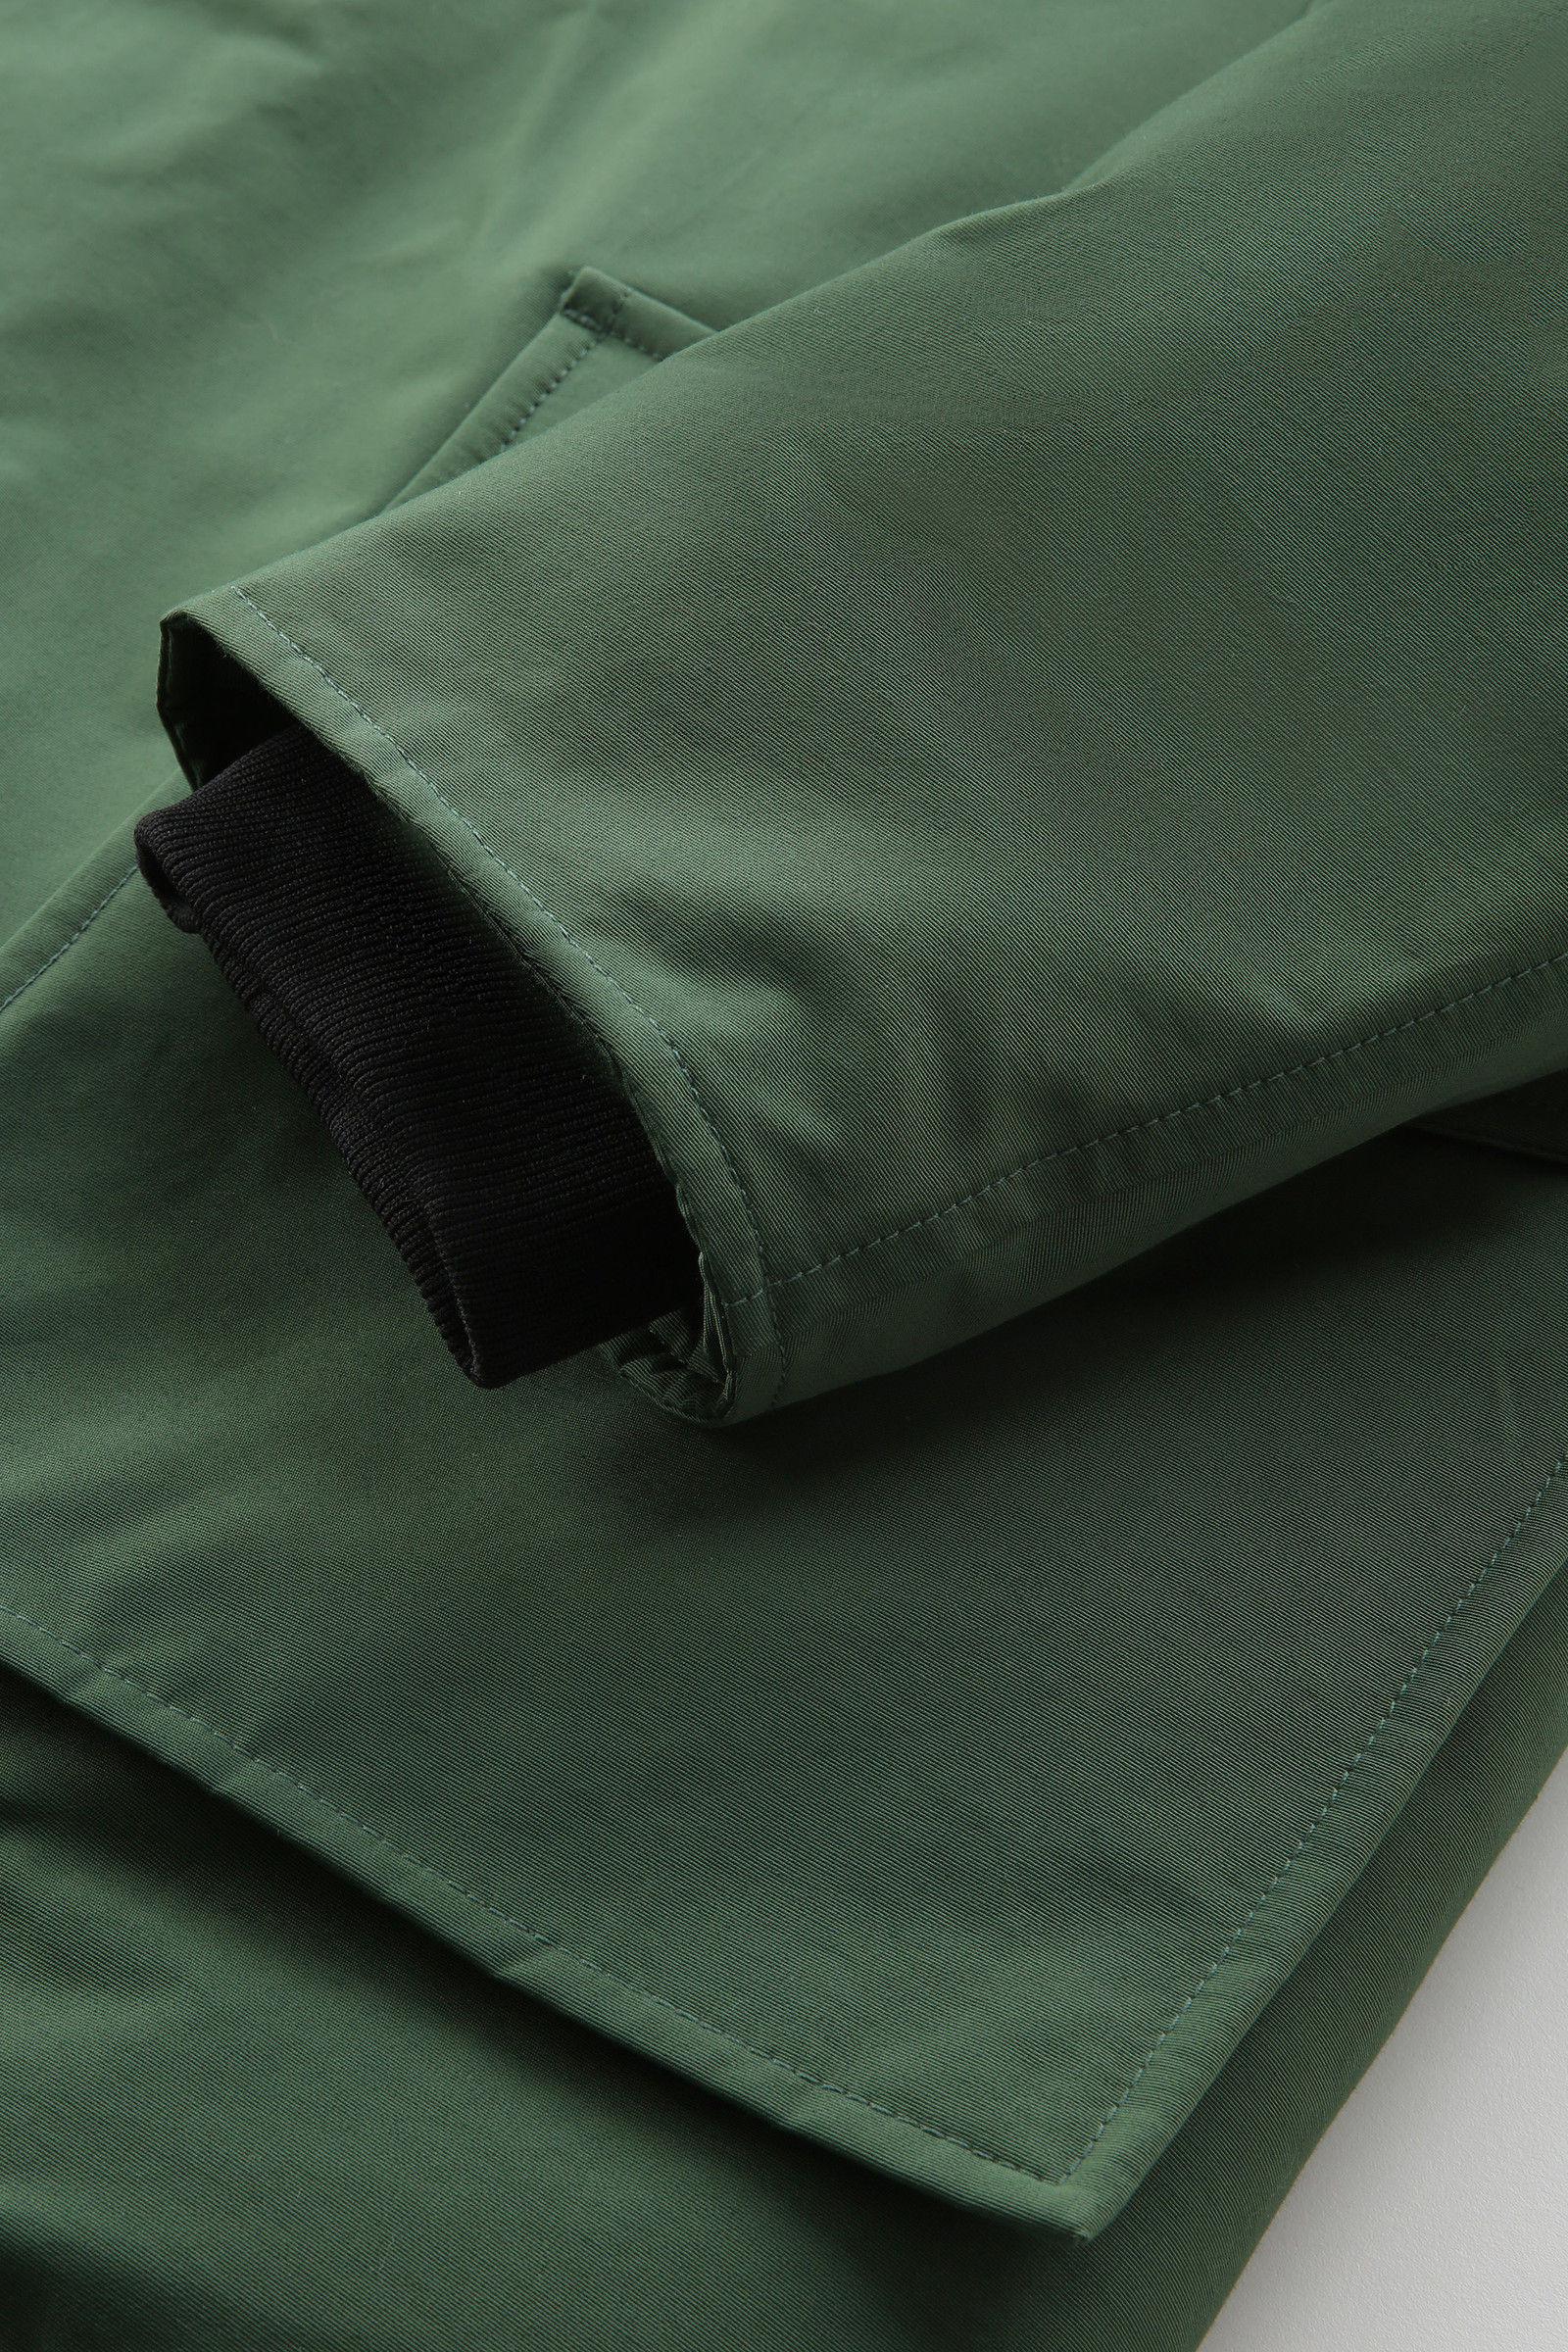 Woolrich Men's Arctic Parka in Ramar Cloth with Detachable Fur Trim Color Green Size L